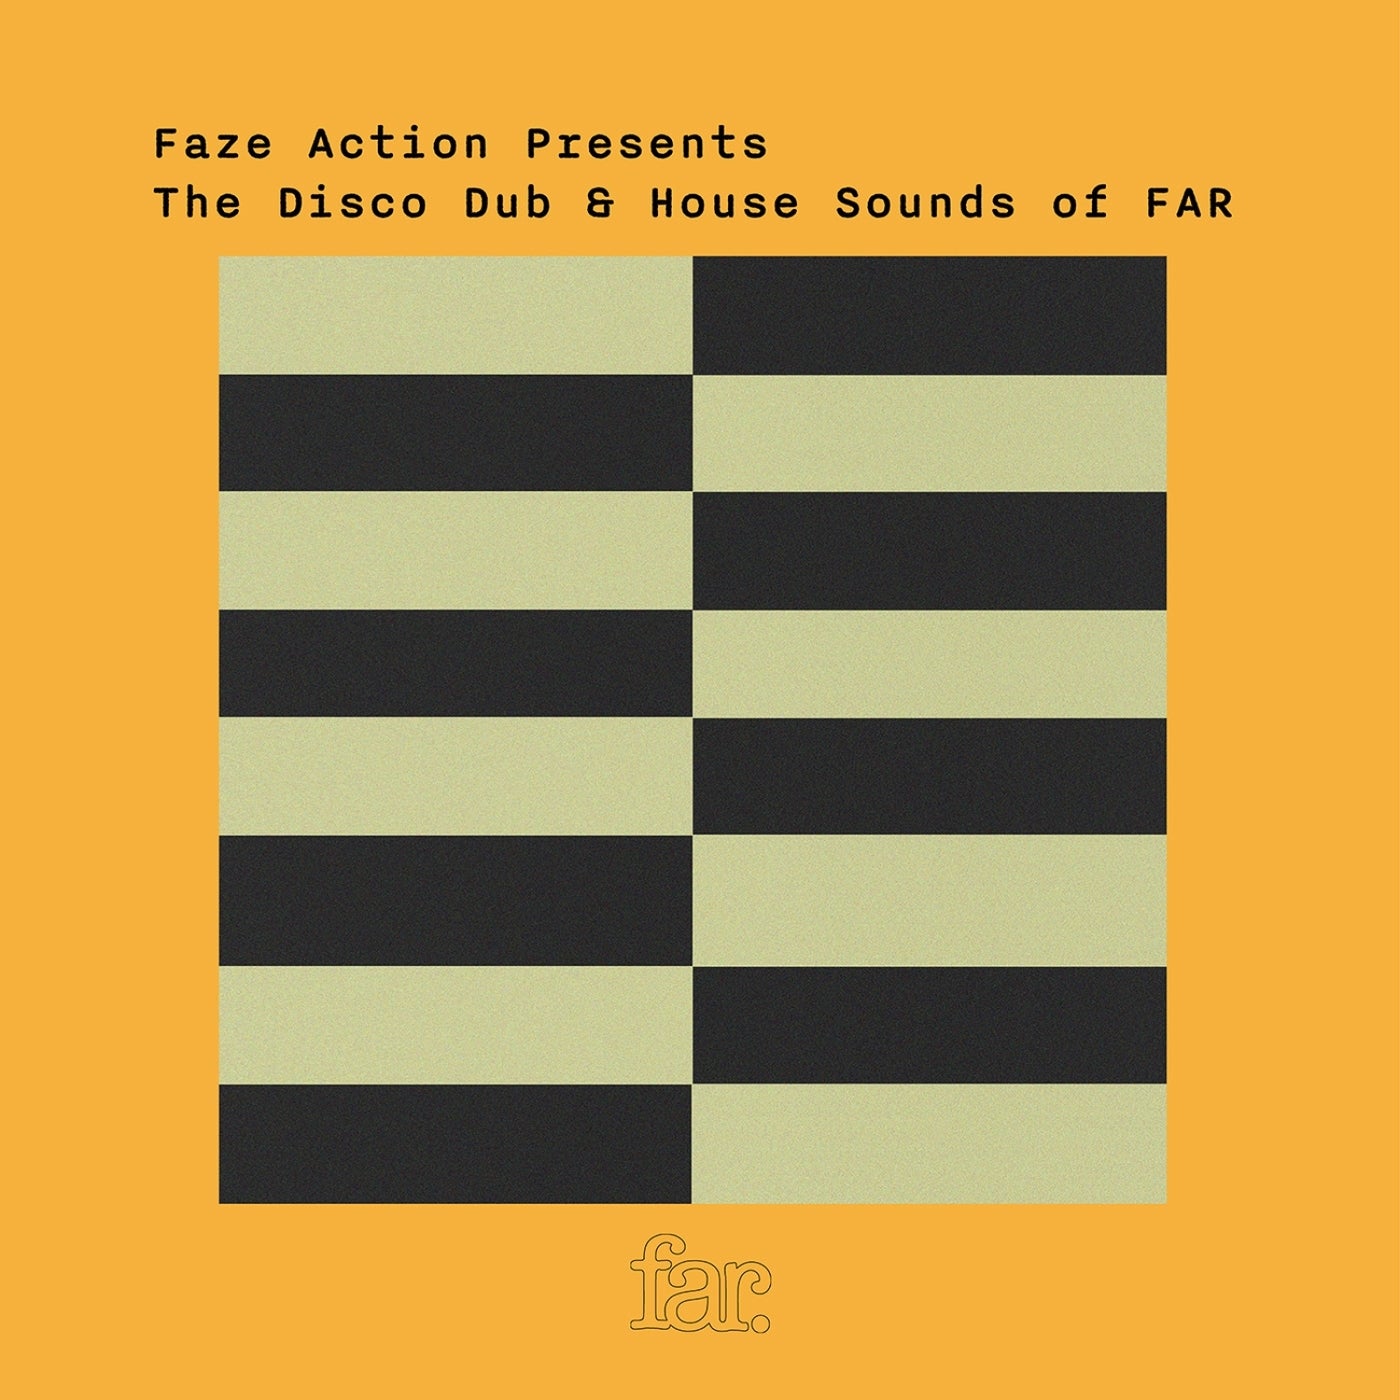 Faze Action Present The Disco Dub & House Sound of FAR